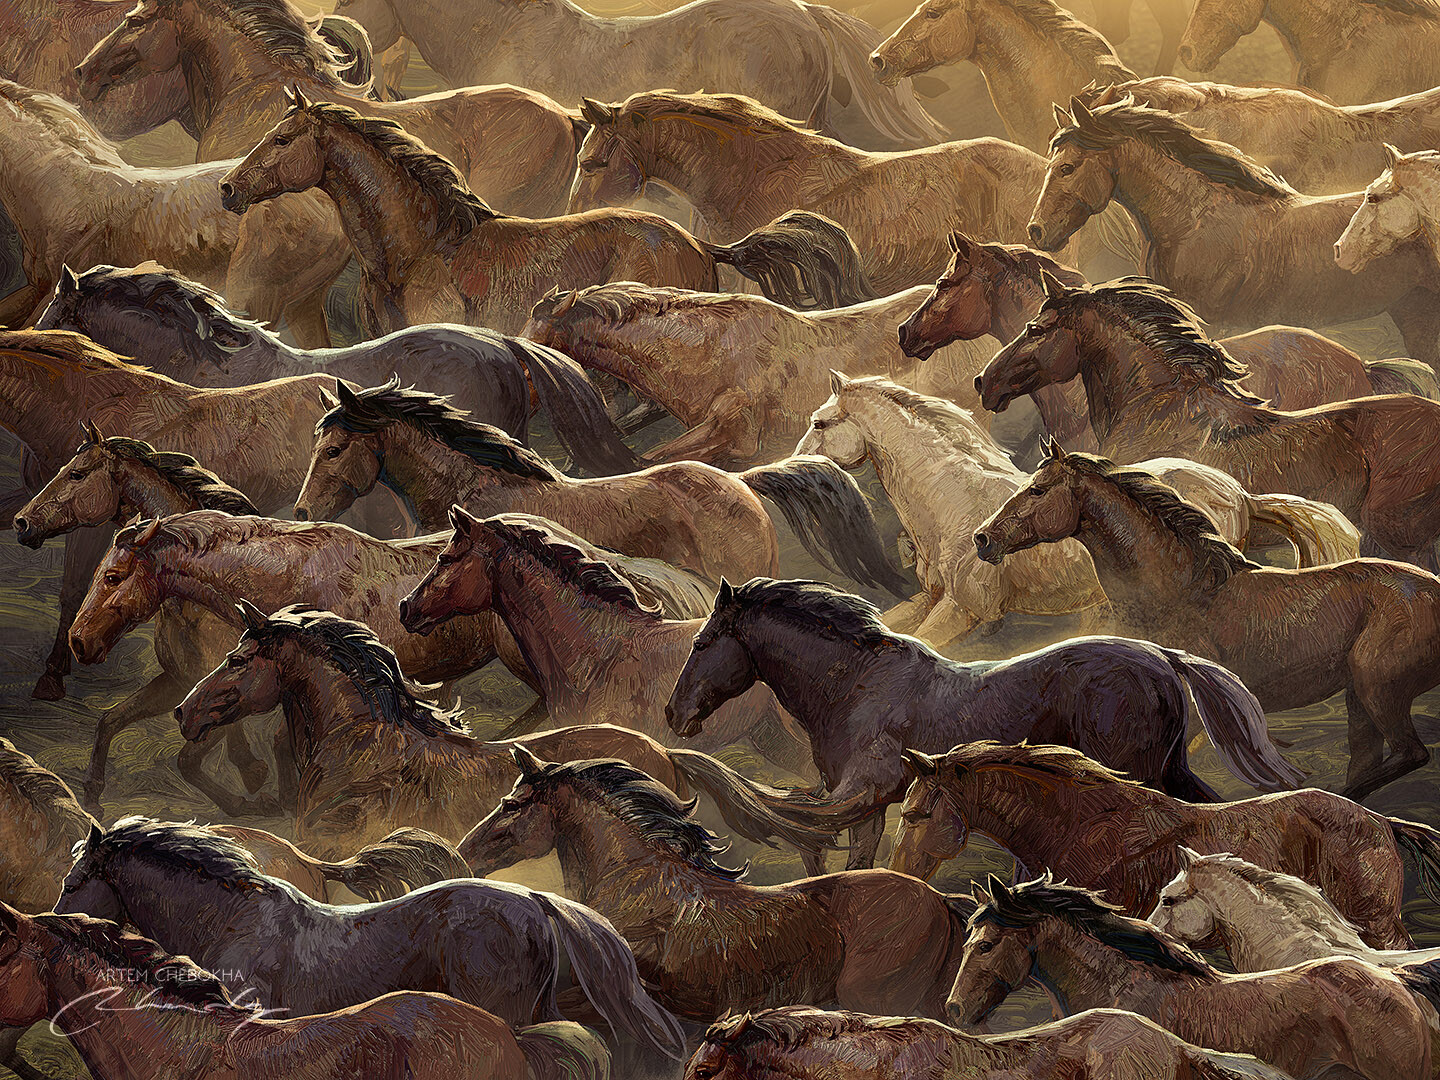 artem-chebokha-01-horses-1440.jpg